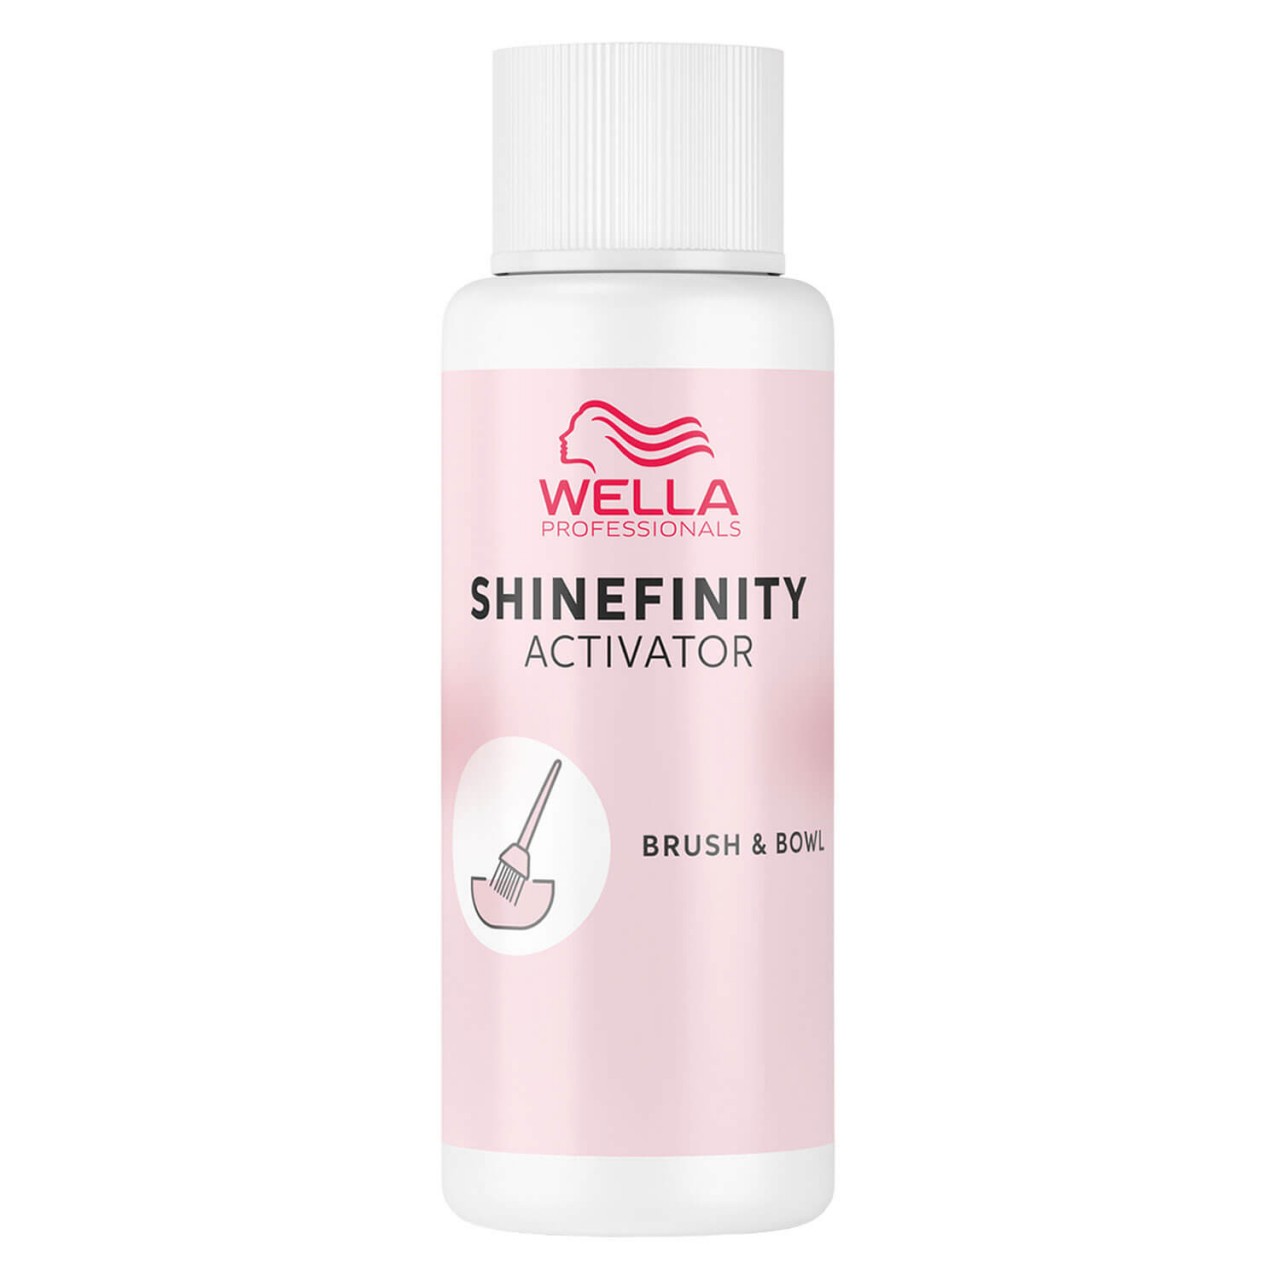 Shinefinity - Activator Brush & Bowl Activator 2% von Wella